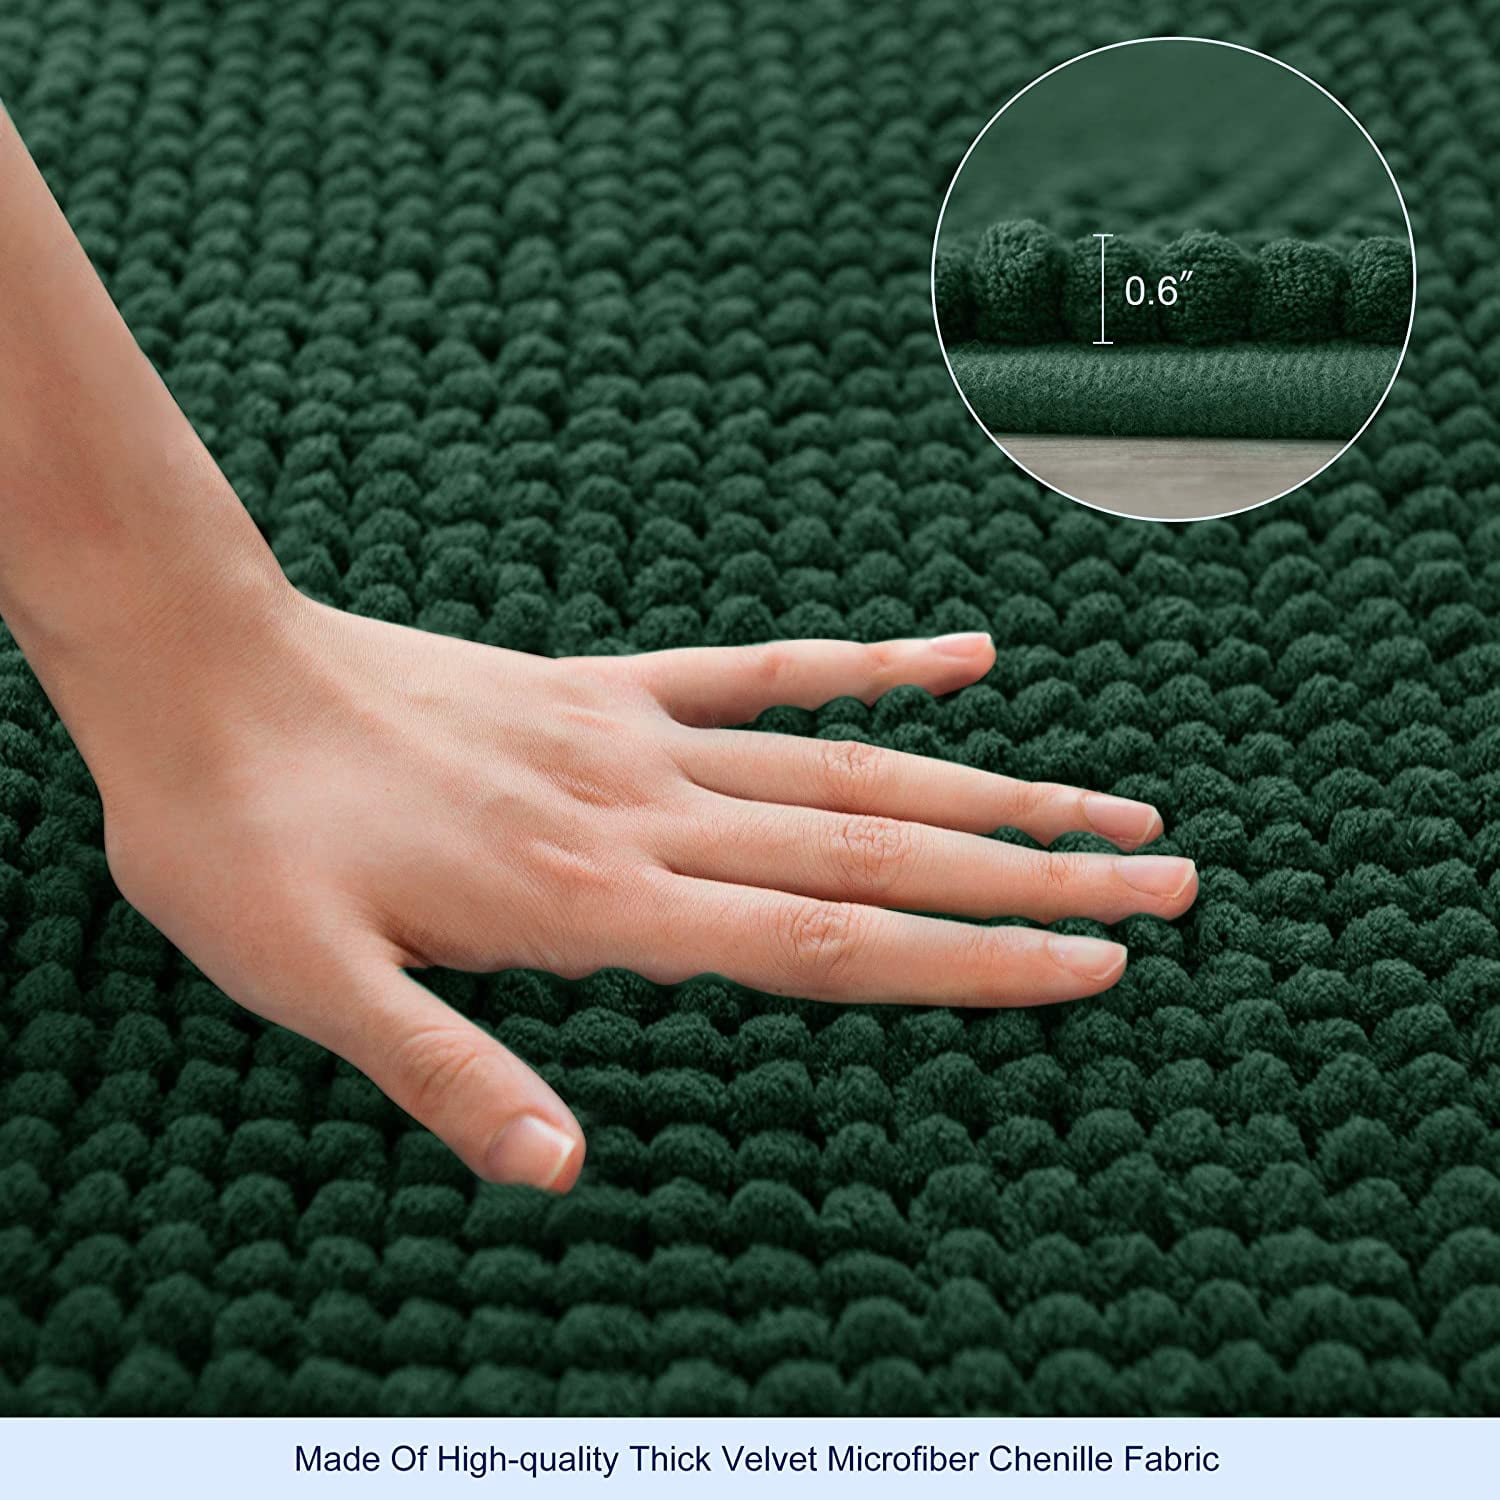 Salted Harambe Ventures Soft Non-slip Mat Rug Carpet Cushion Dave